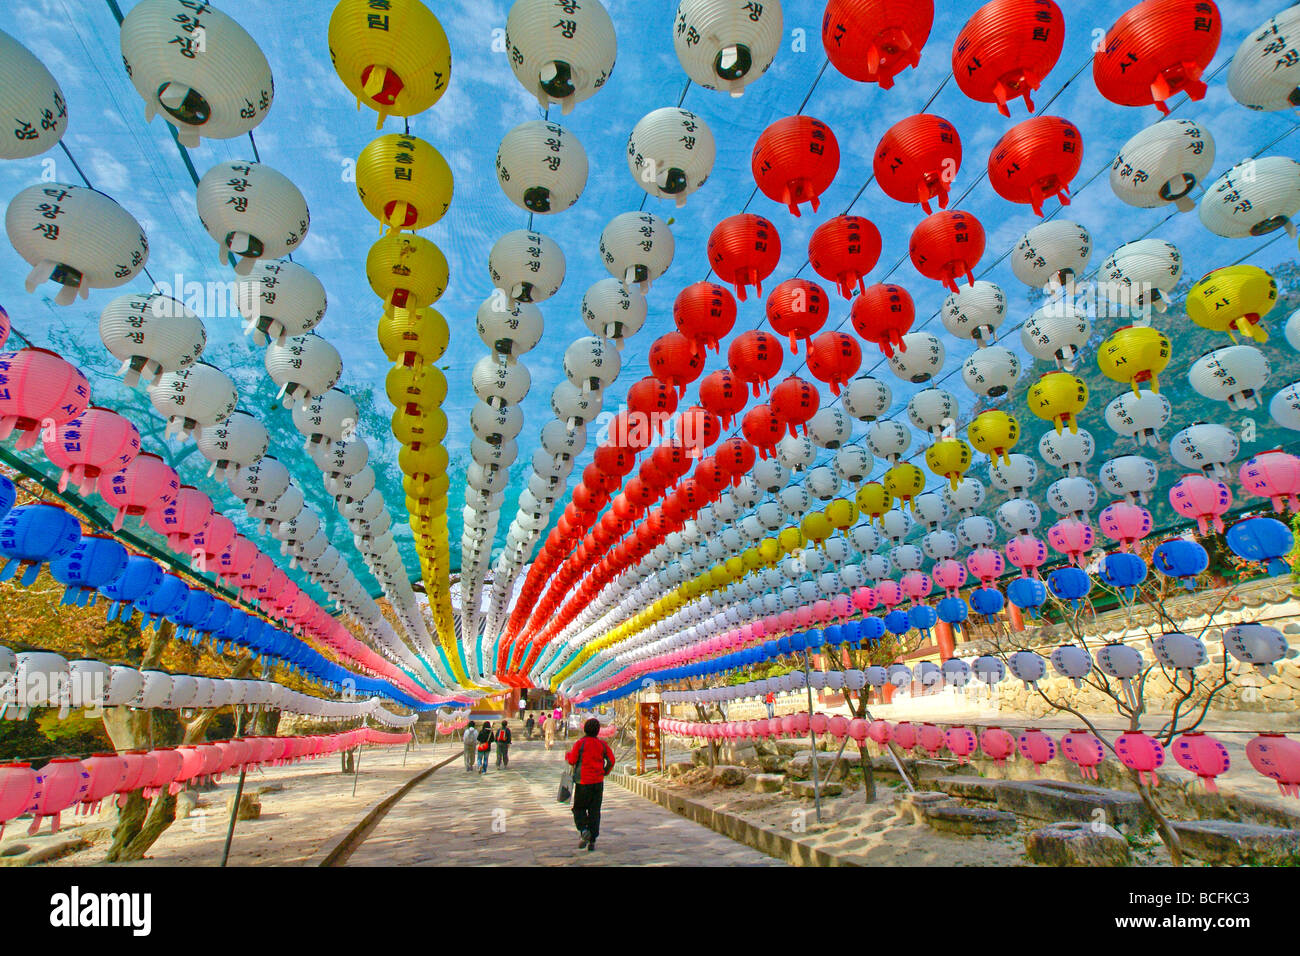 Paper lanterns at entrance to Tongdosa Buddhist temple, South Korea Stock Photo